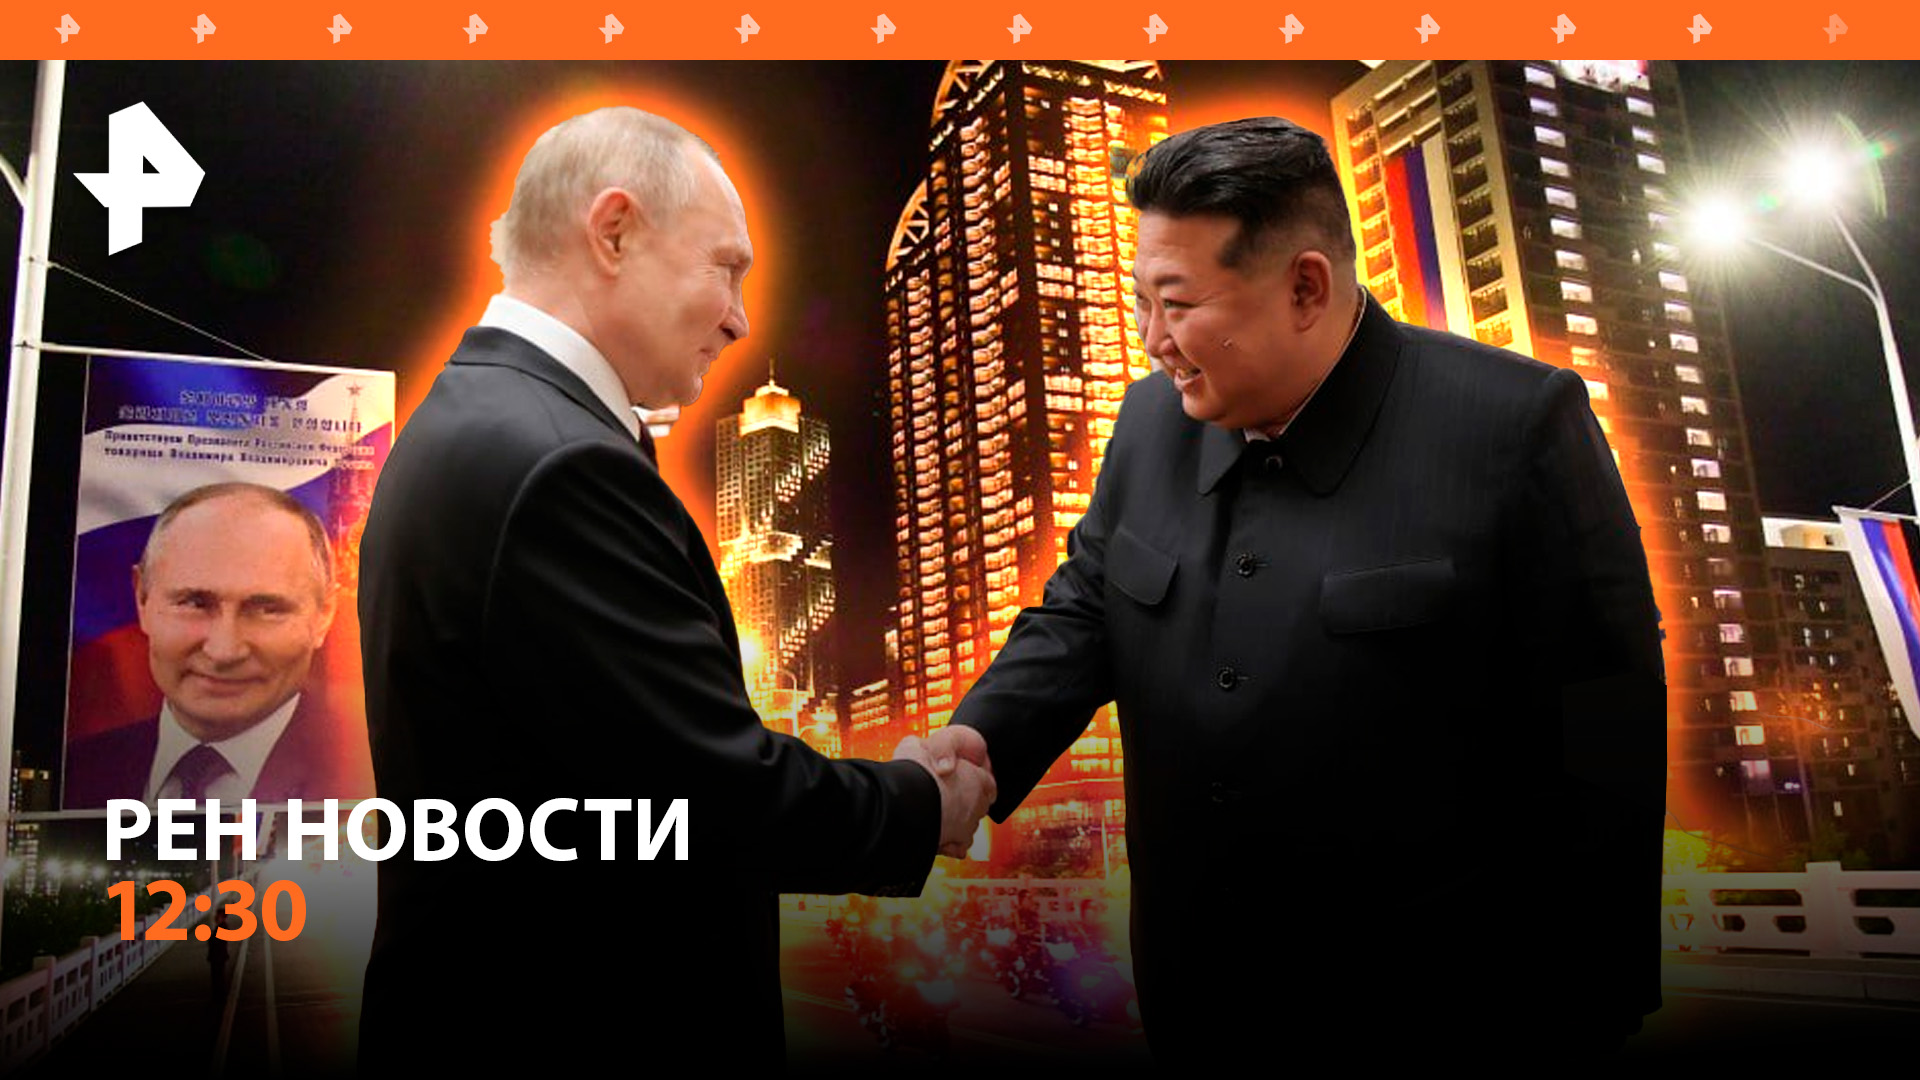 Детали визита Путина в КНДР и реакция Запада / Новые случаи отравления доставкой / РЕН Новости 12:30